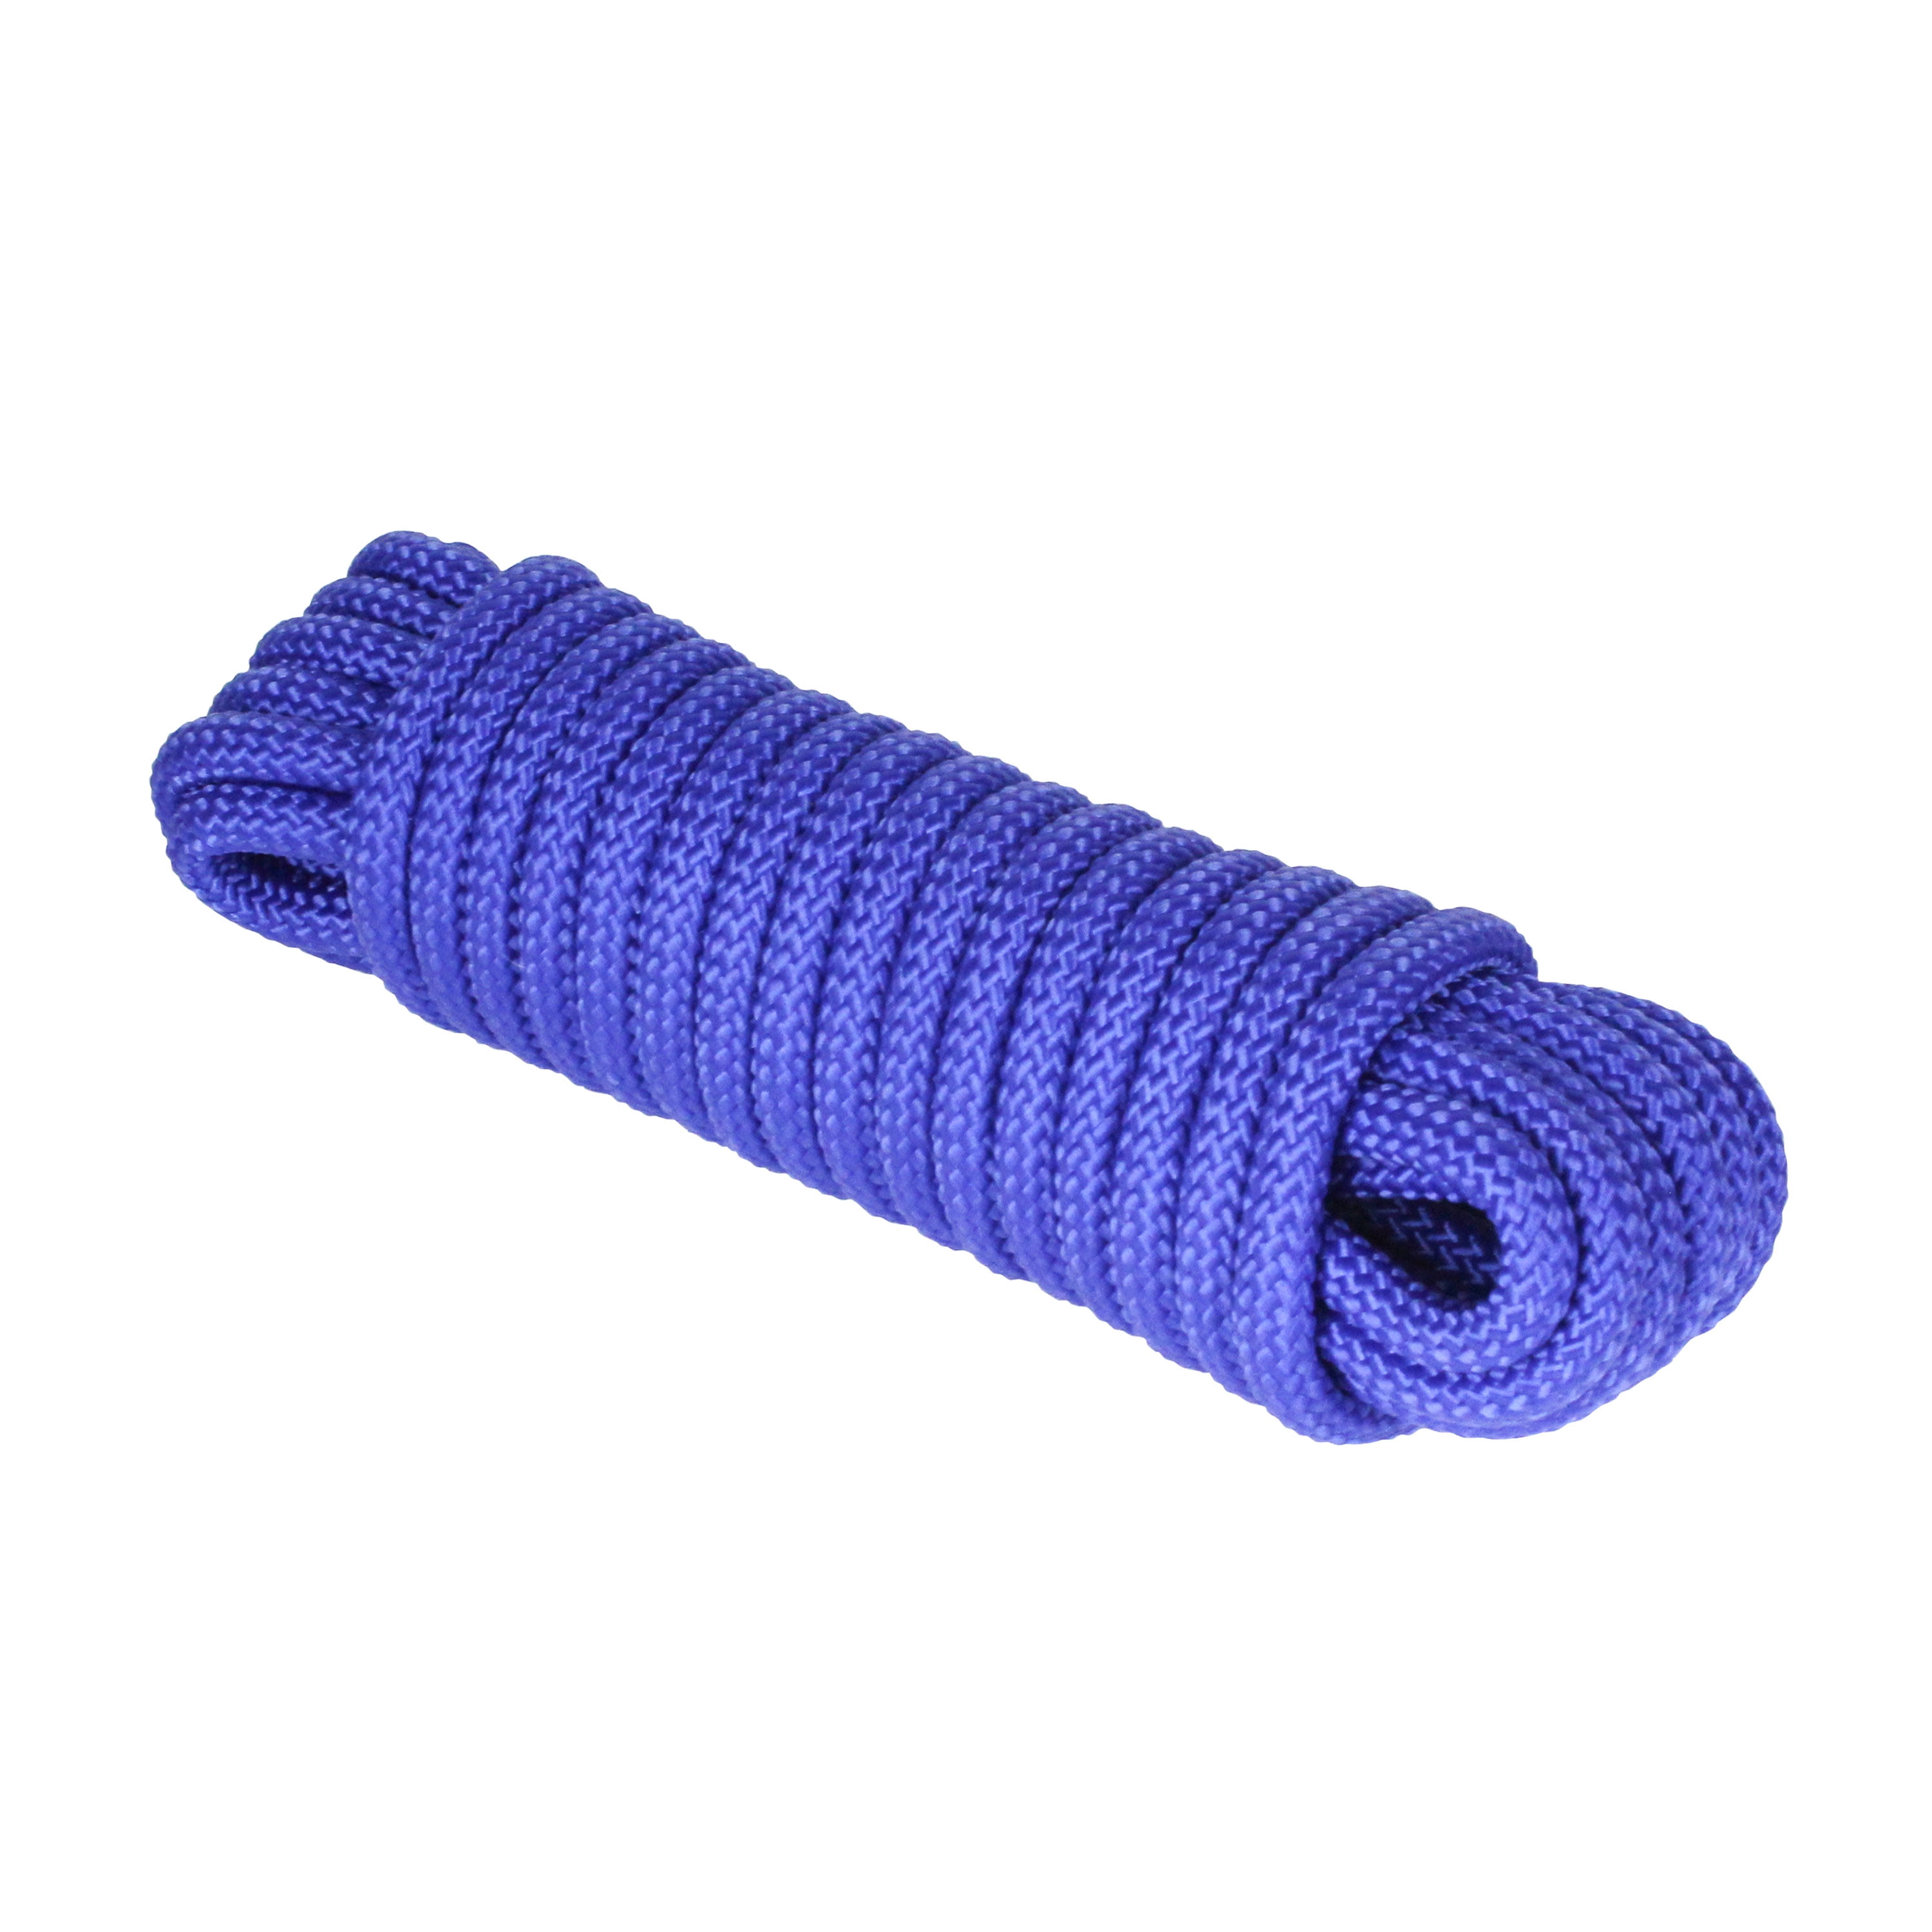 16 Strand Hollow Braid Polyethylene Rope Spool Blue/Silver. 8mm x 500 ft 